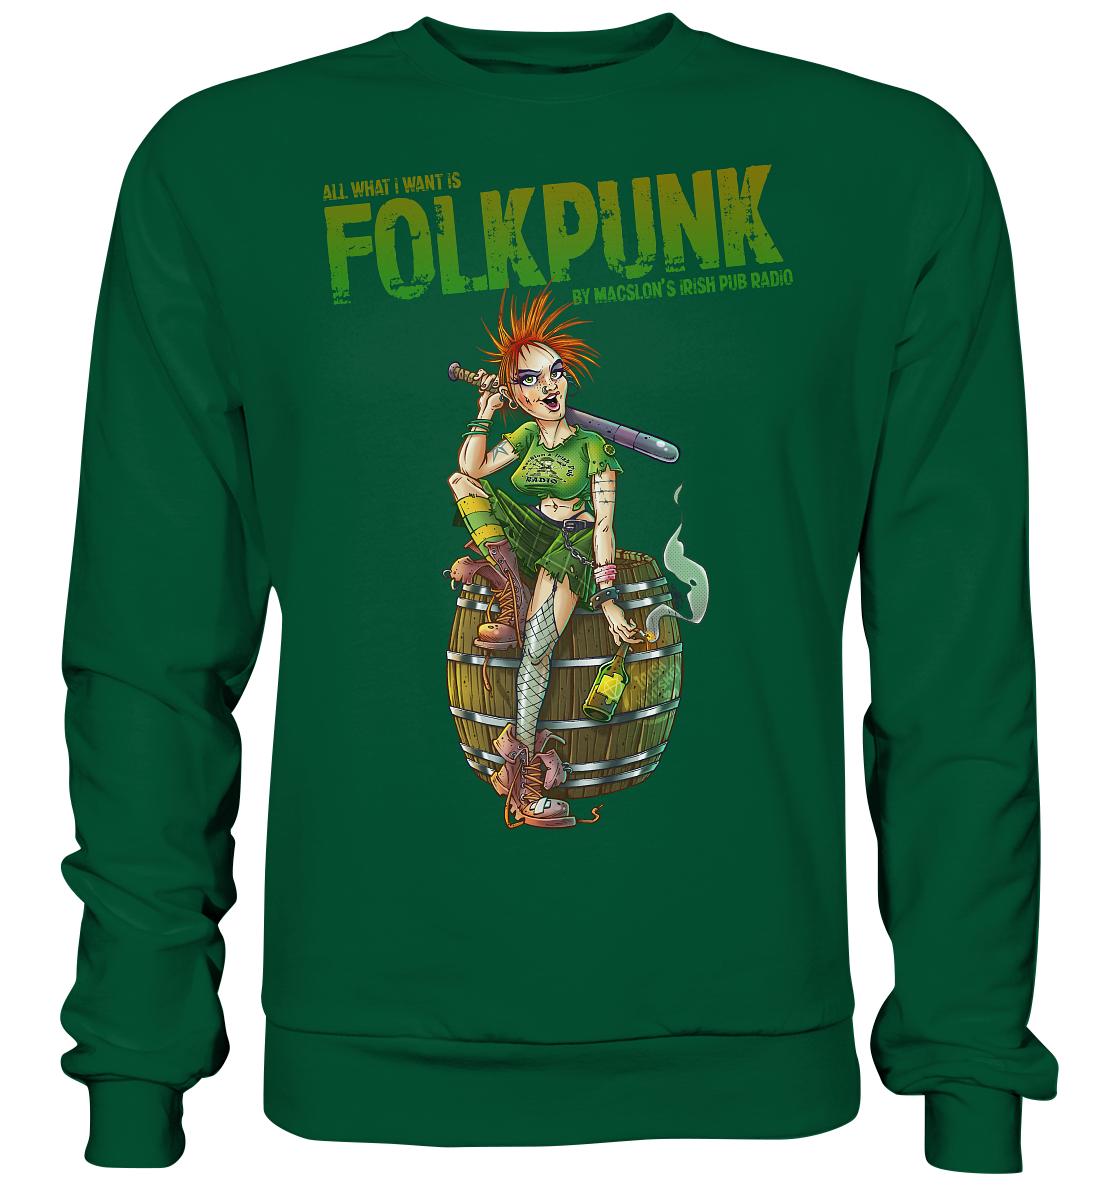 All What I Want Is "Folkpunk" - Basic Sweatshirt